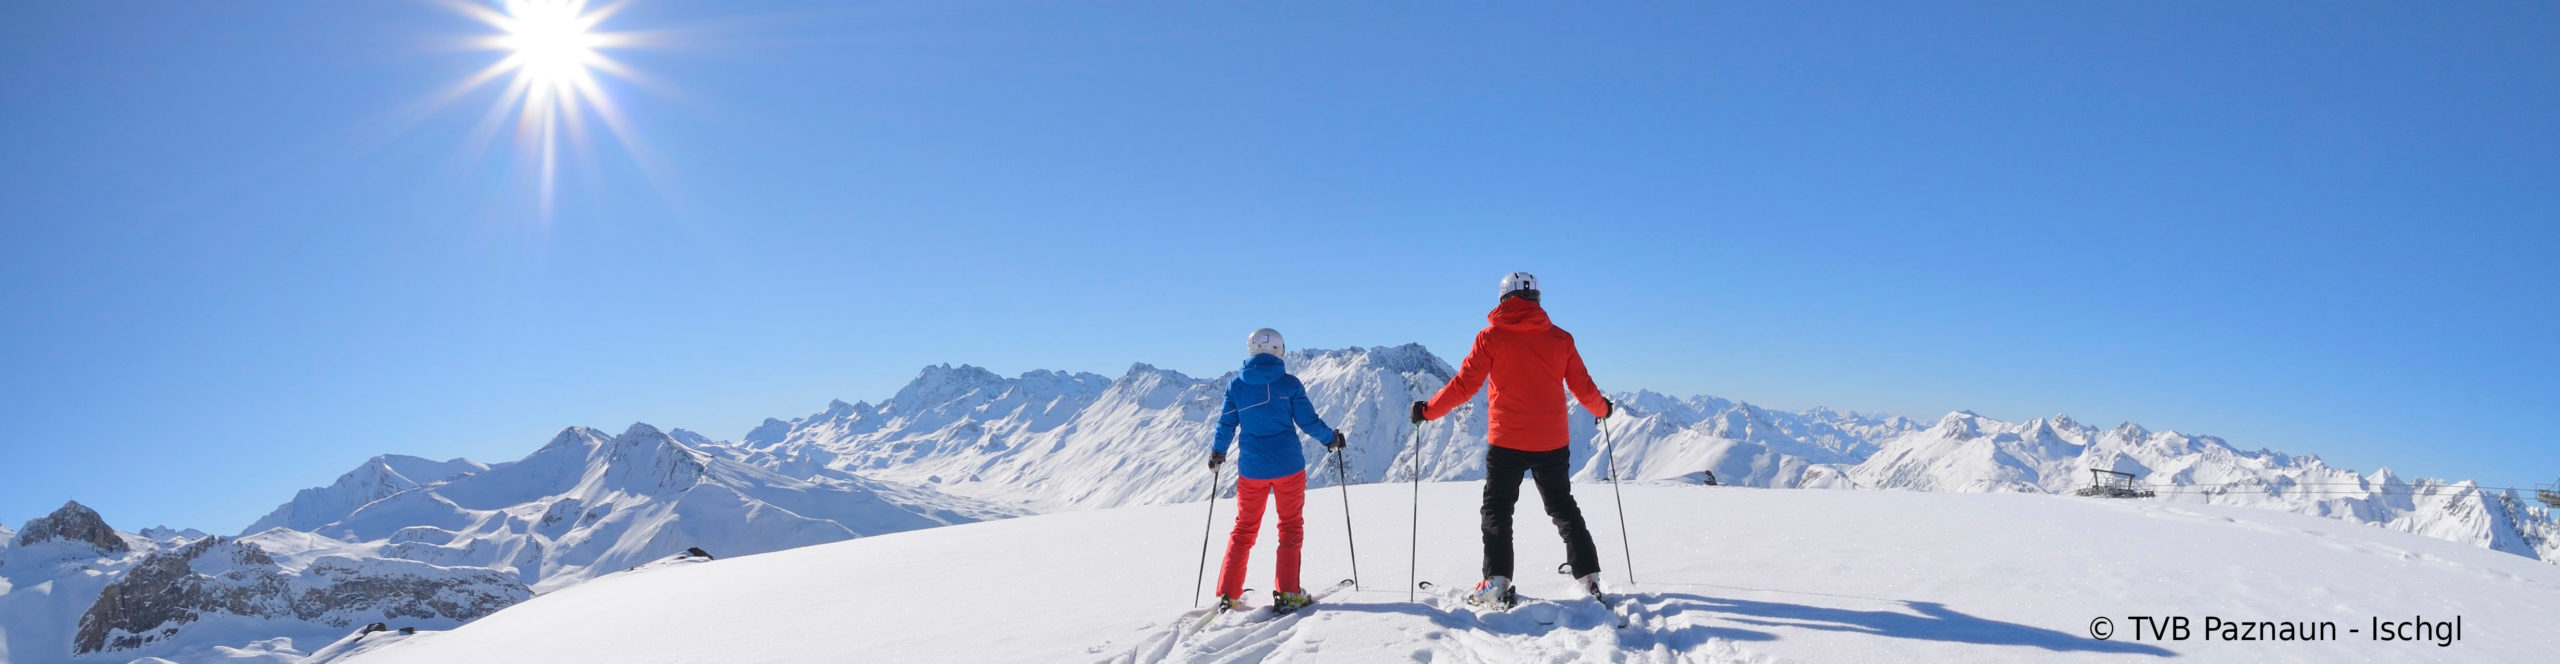 ISCHGL Opening – Skiwochenende – 3 Skitage – 3 Sterne Hotel nah an Ischgl- ab Freitag früh 